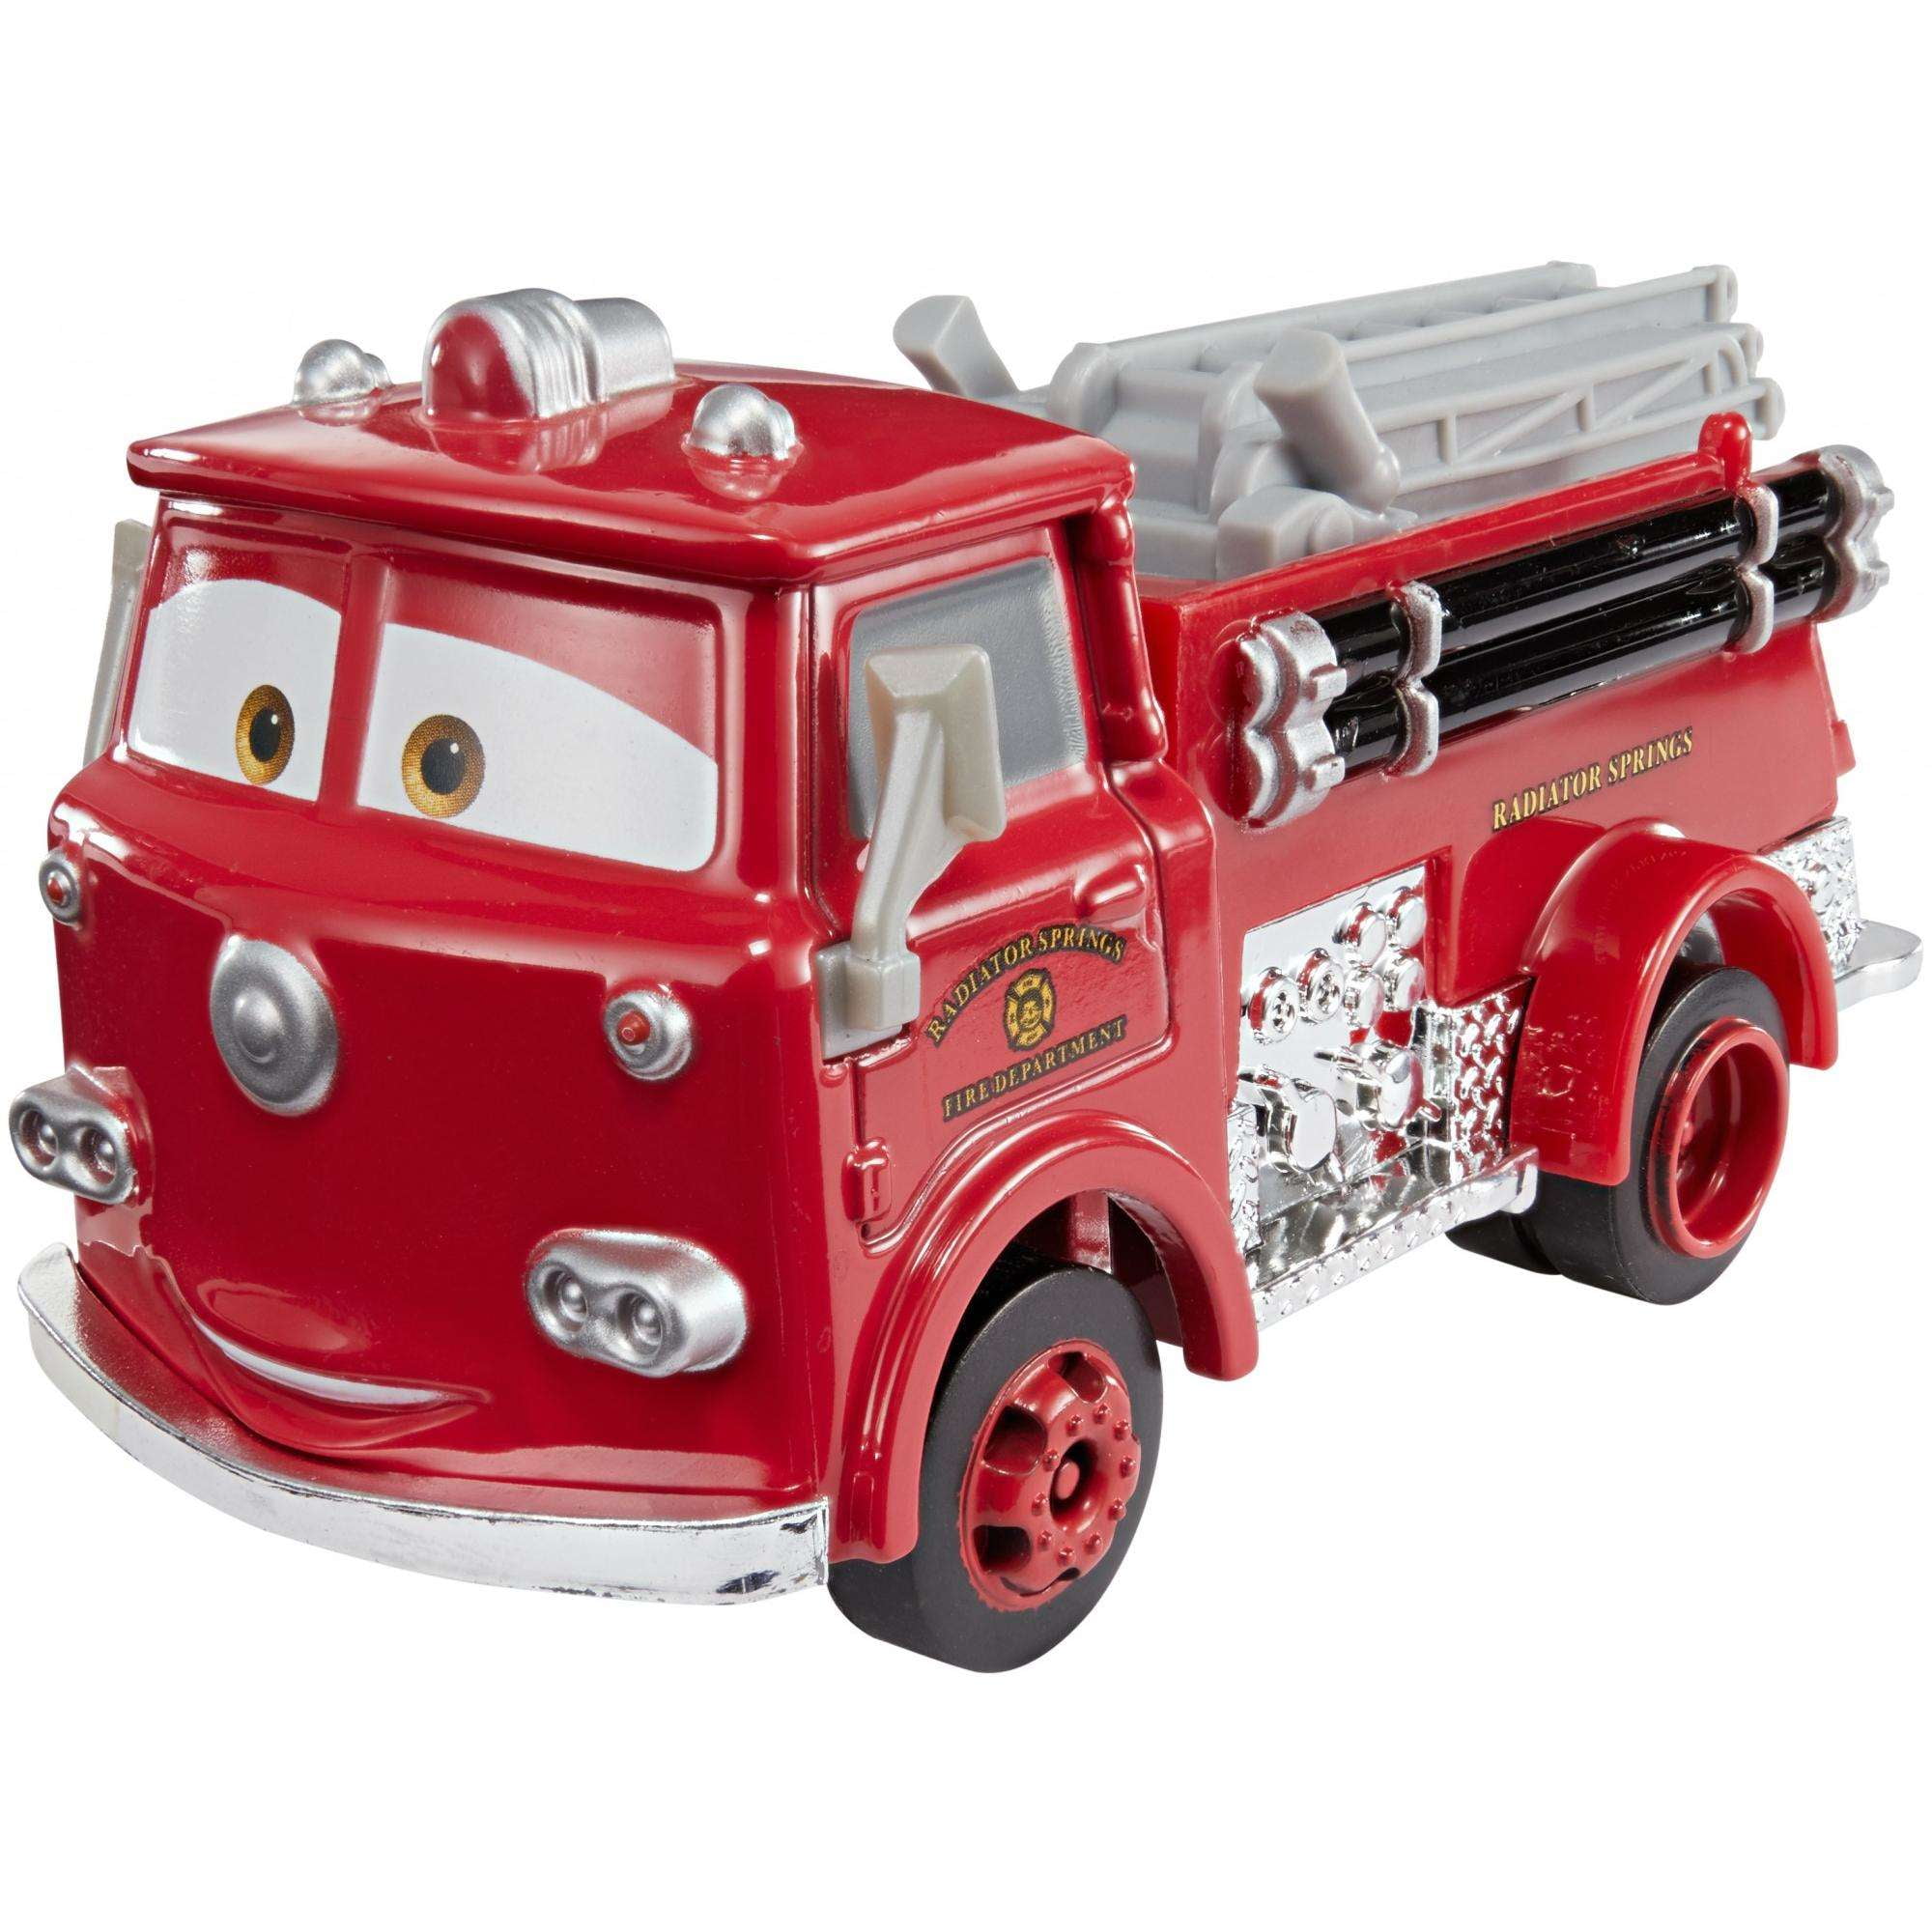 Mattel Disney Pixar Cars Red Firetruck Metal 1:55 Diecast Toy Vehicle Loose New 